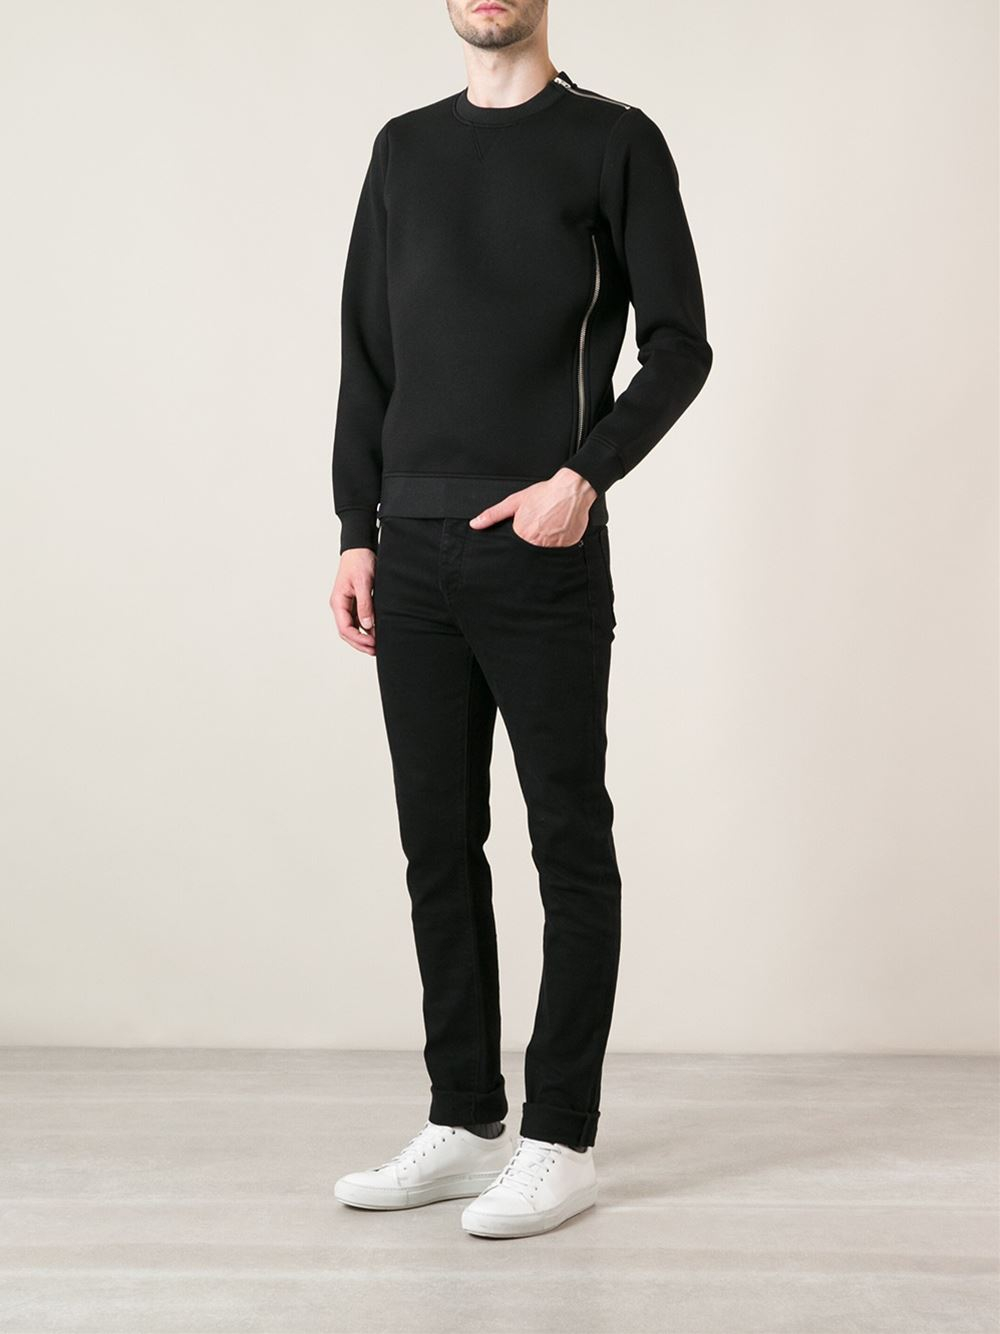 Diesel Black Gold Side Zip Sweatshirt in Black for Men | Lyst